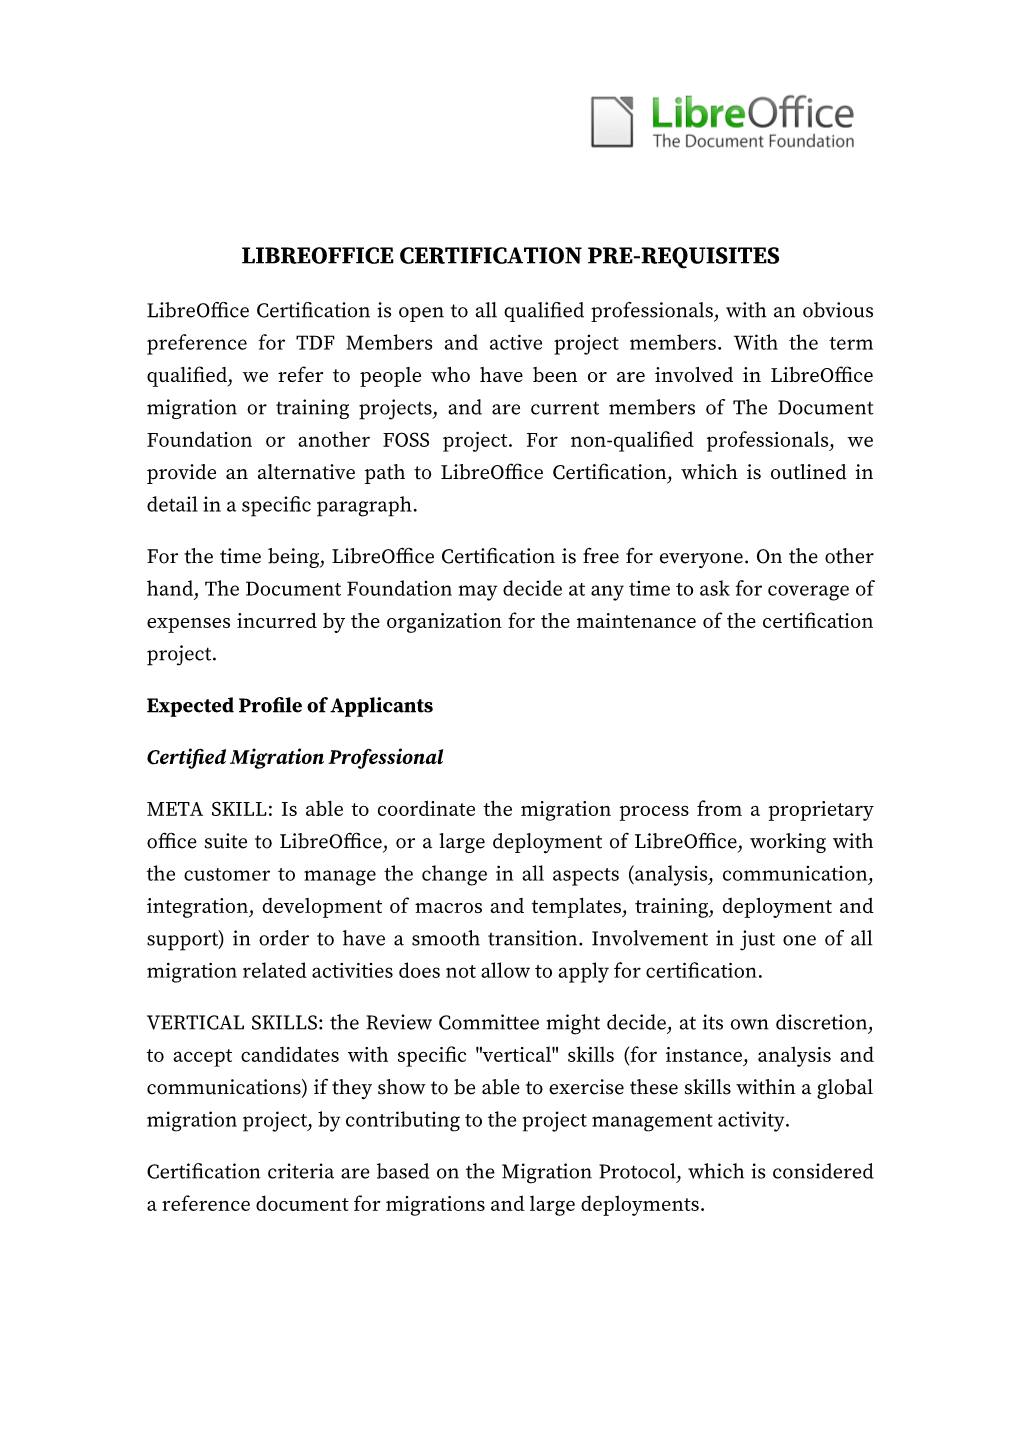 Libreoffice Certification Pre-Requisites